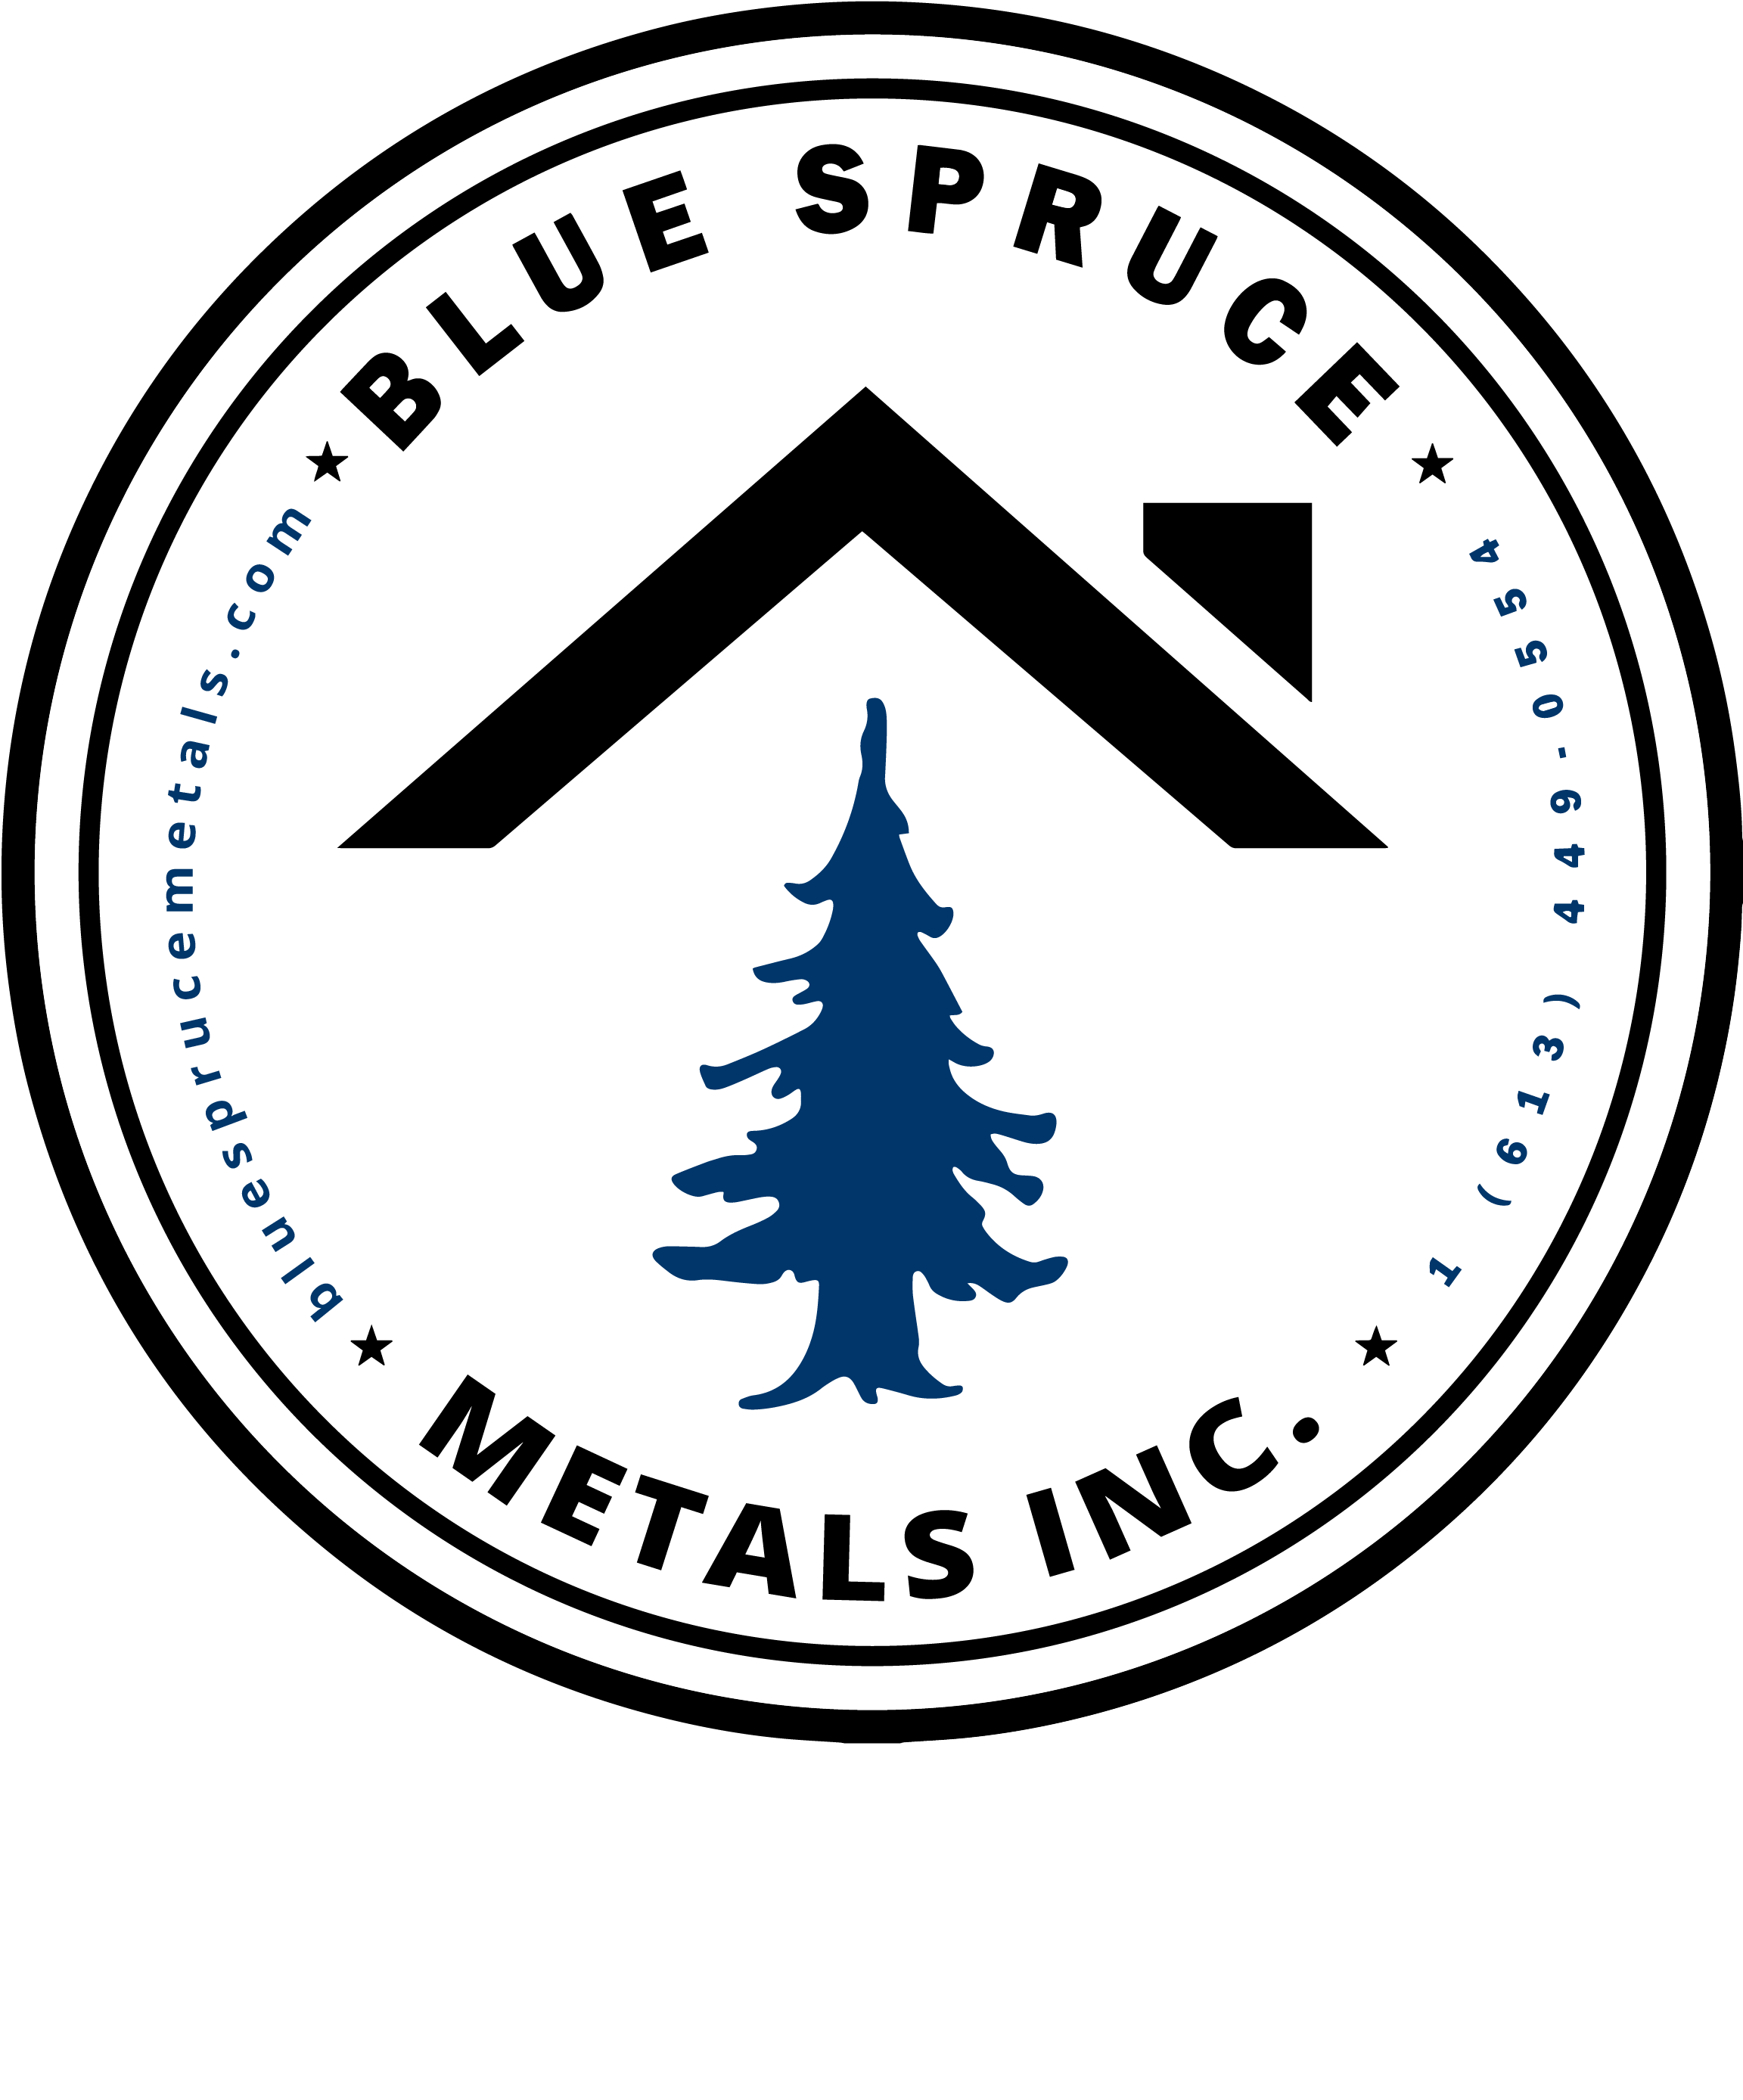 Blue Spruce Metals Inc.